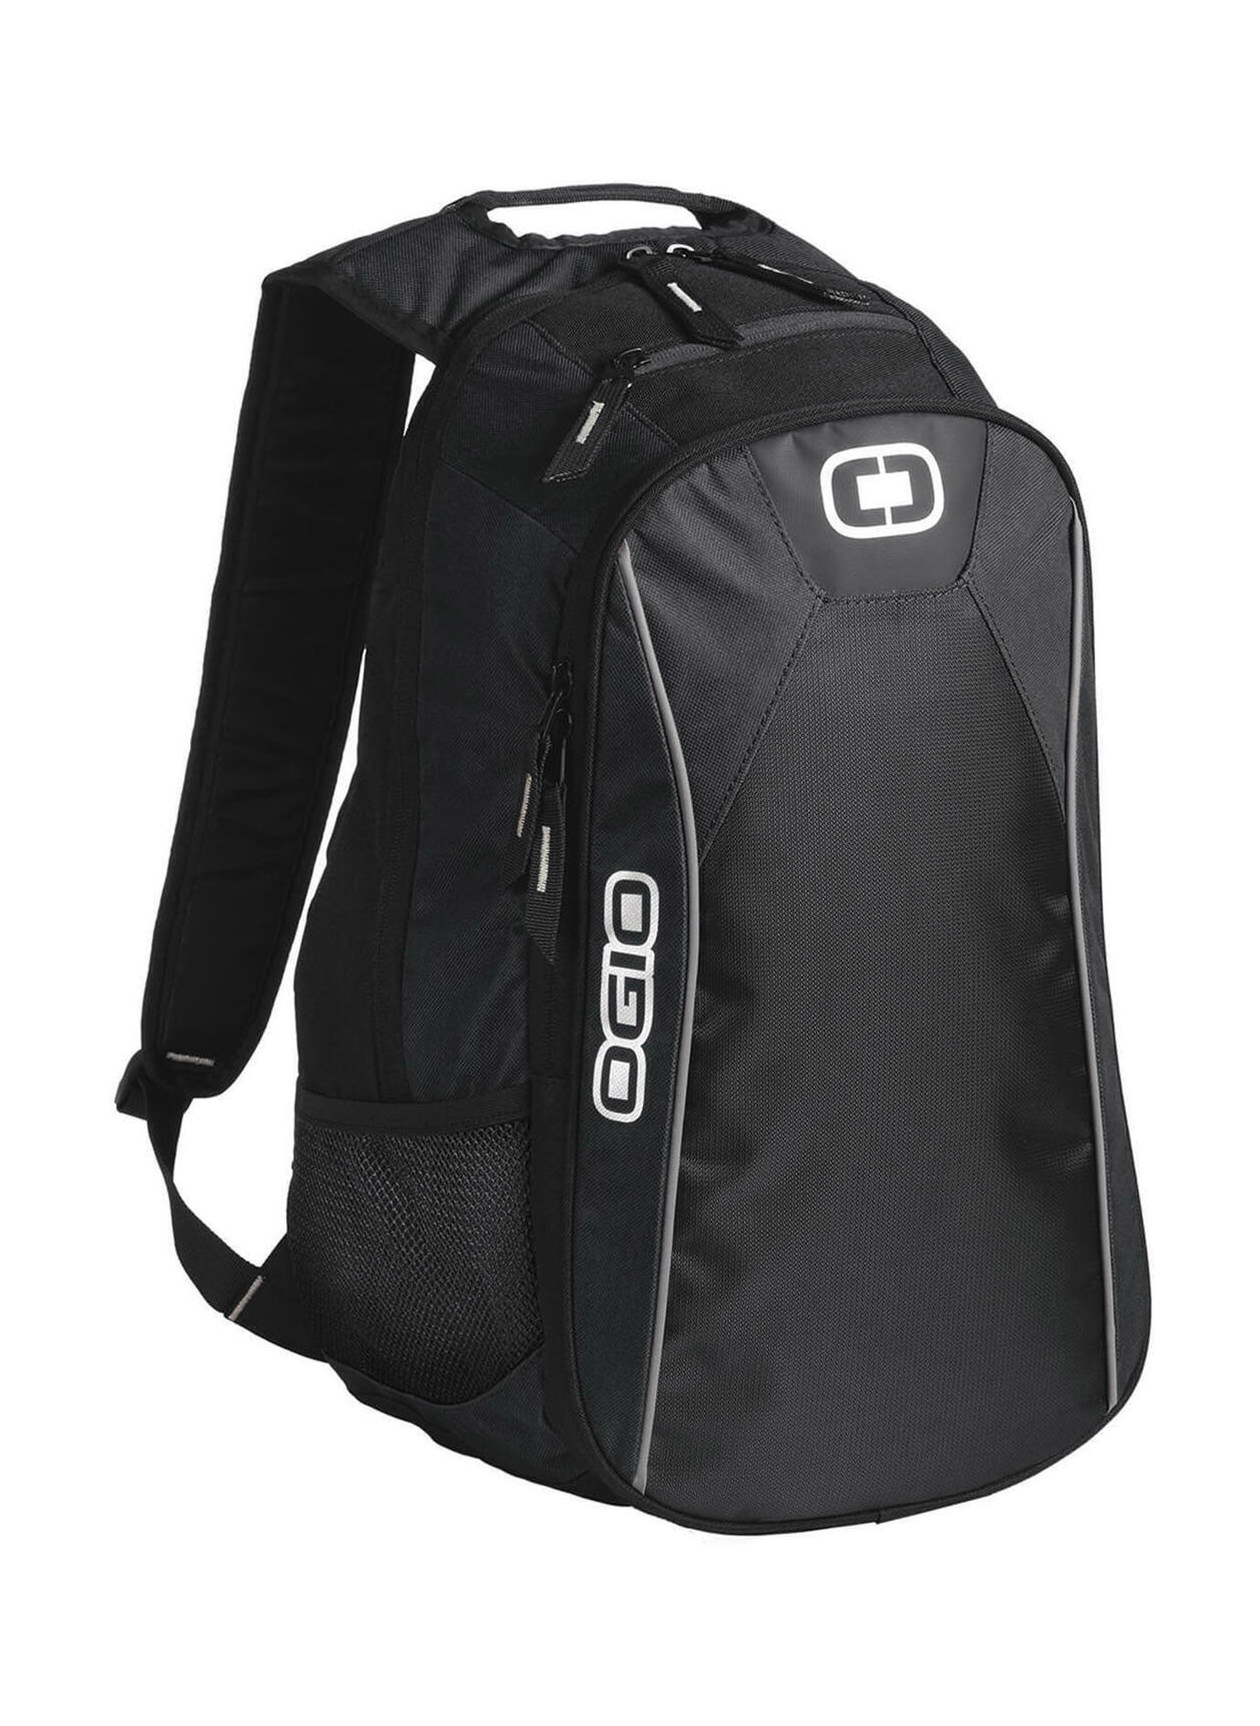 OGIO Black Marshall Backpack